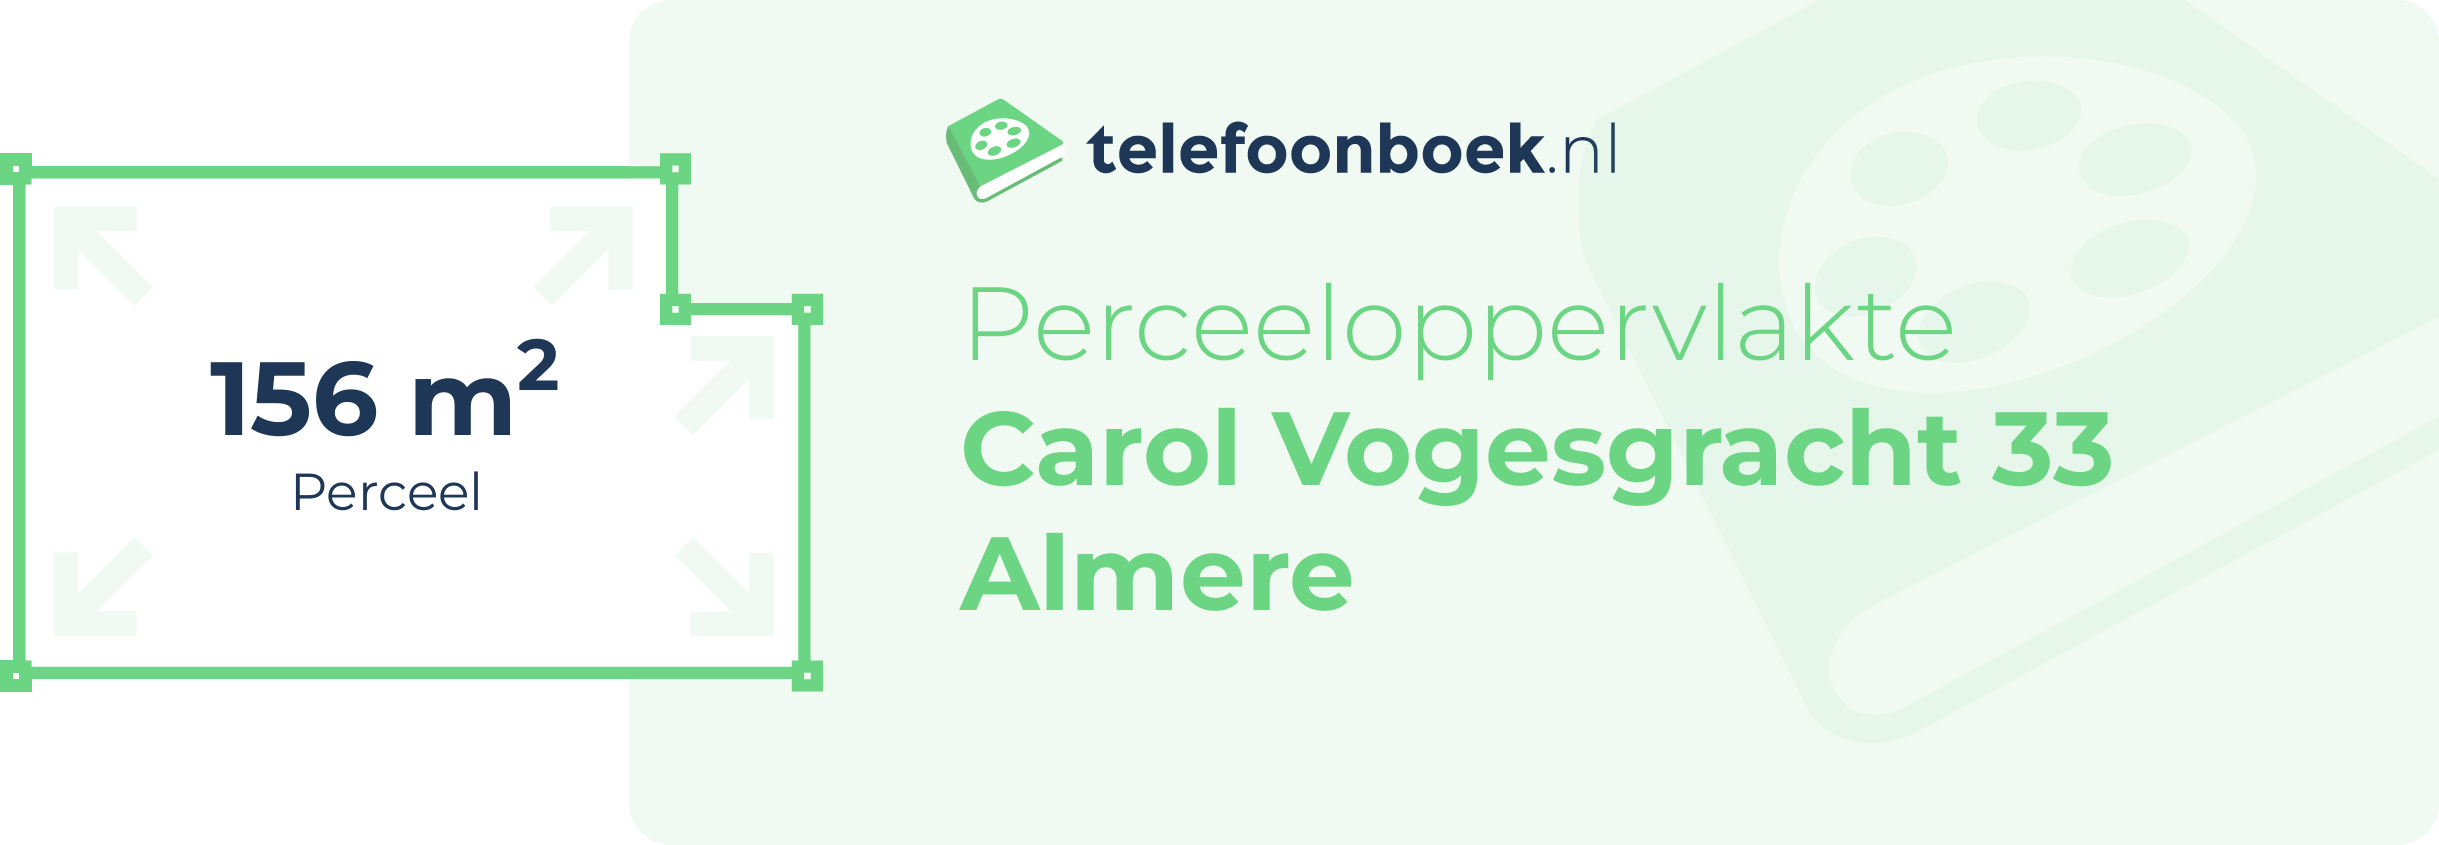 Perceeloppervlakte Carol Vogesgracht 33 Almere